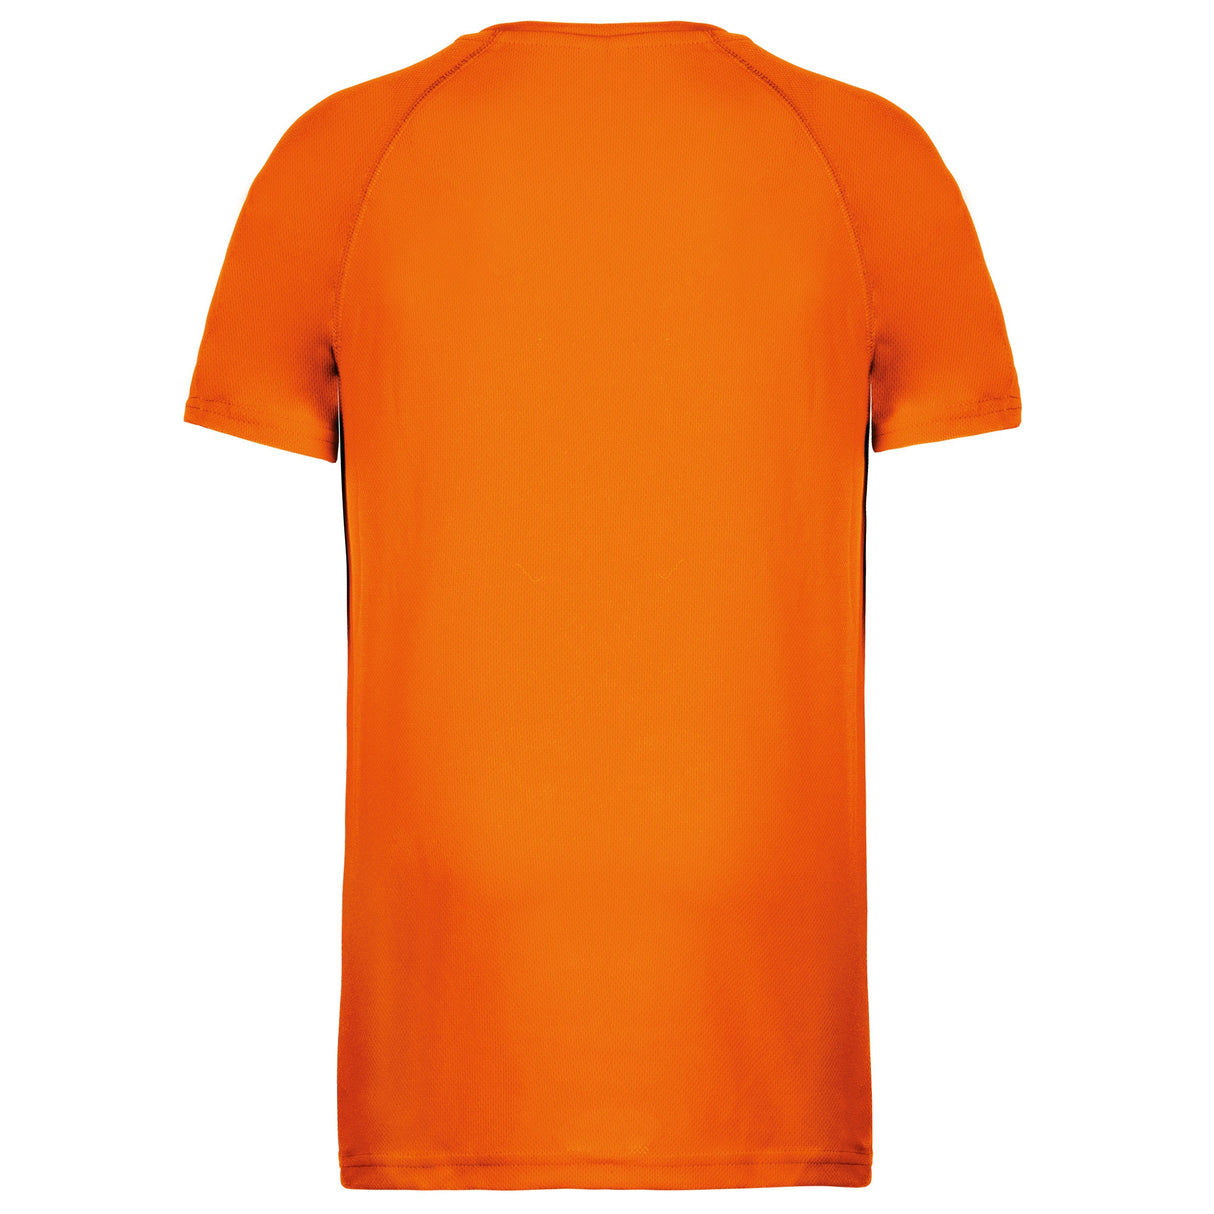 Kariban Proact Men's Short-Sleeved Sports T-Shirt